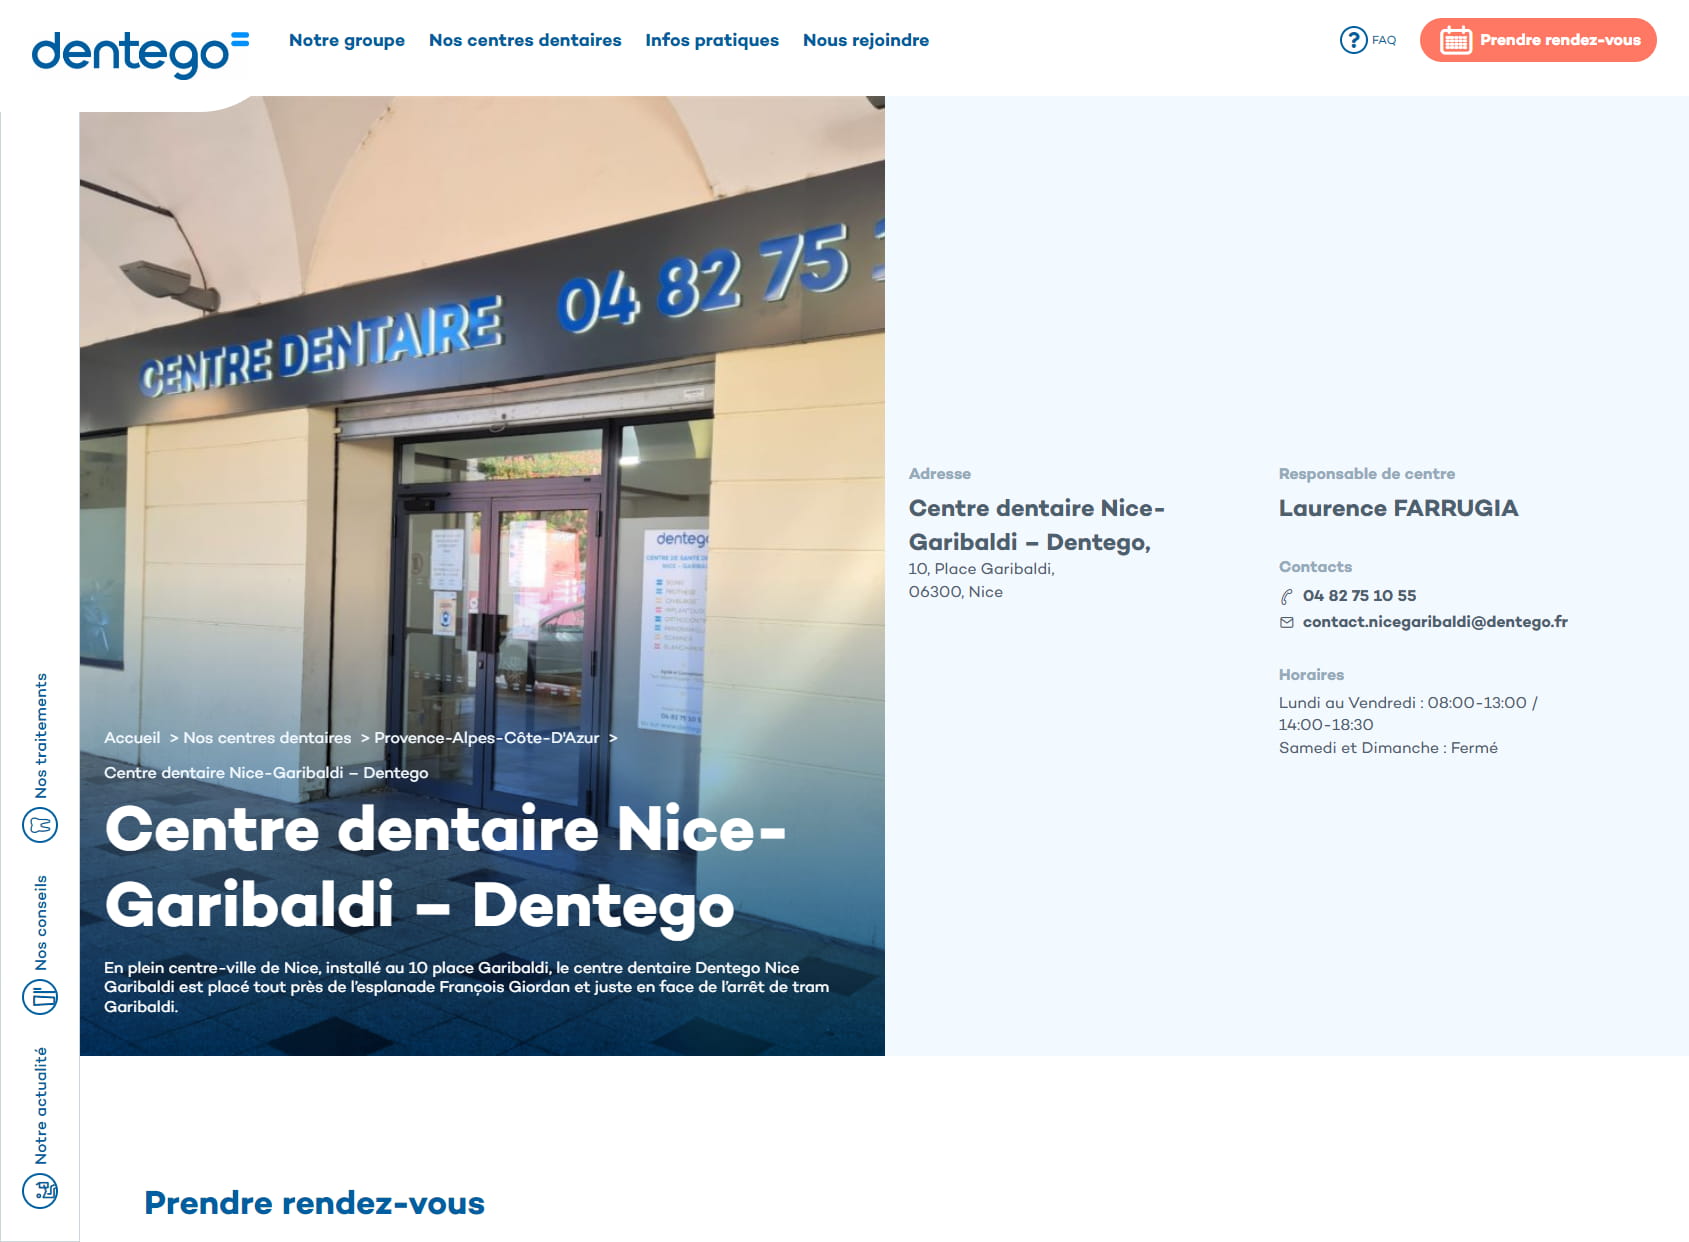 Centre Dentaire Nice Garibaldi : Dentiste Nice - Dentego